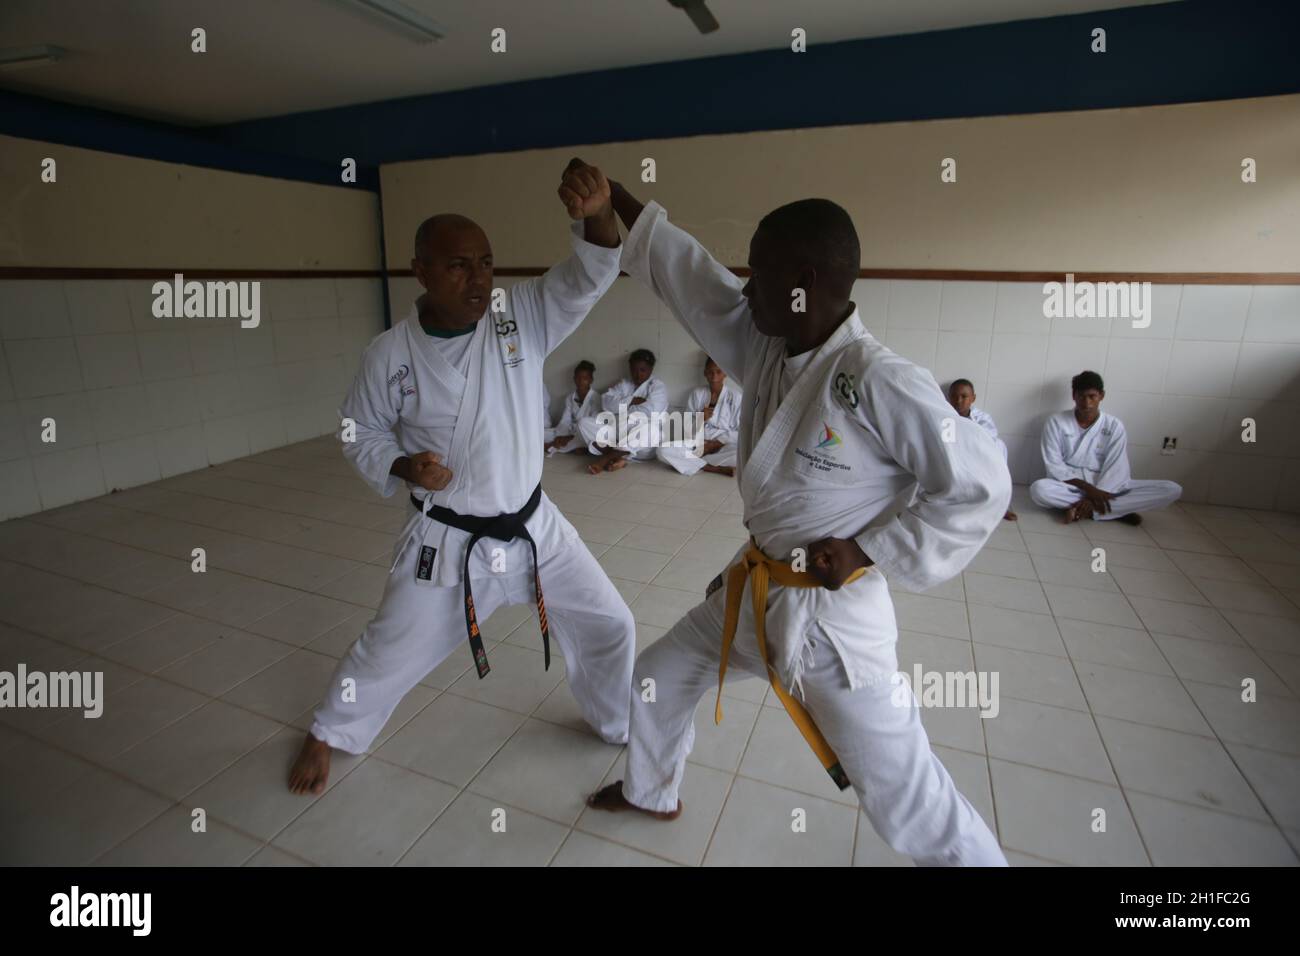 salvador, bahia / brazil - november 8, 2018: public school students from Bairro da Paz in Salvador are seen practicing karate in the school's field. * Stock Photo